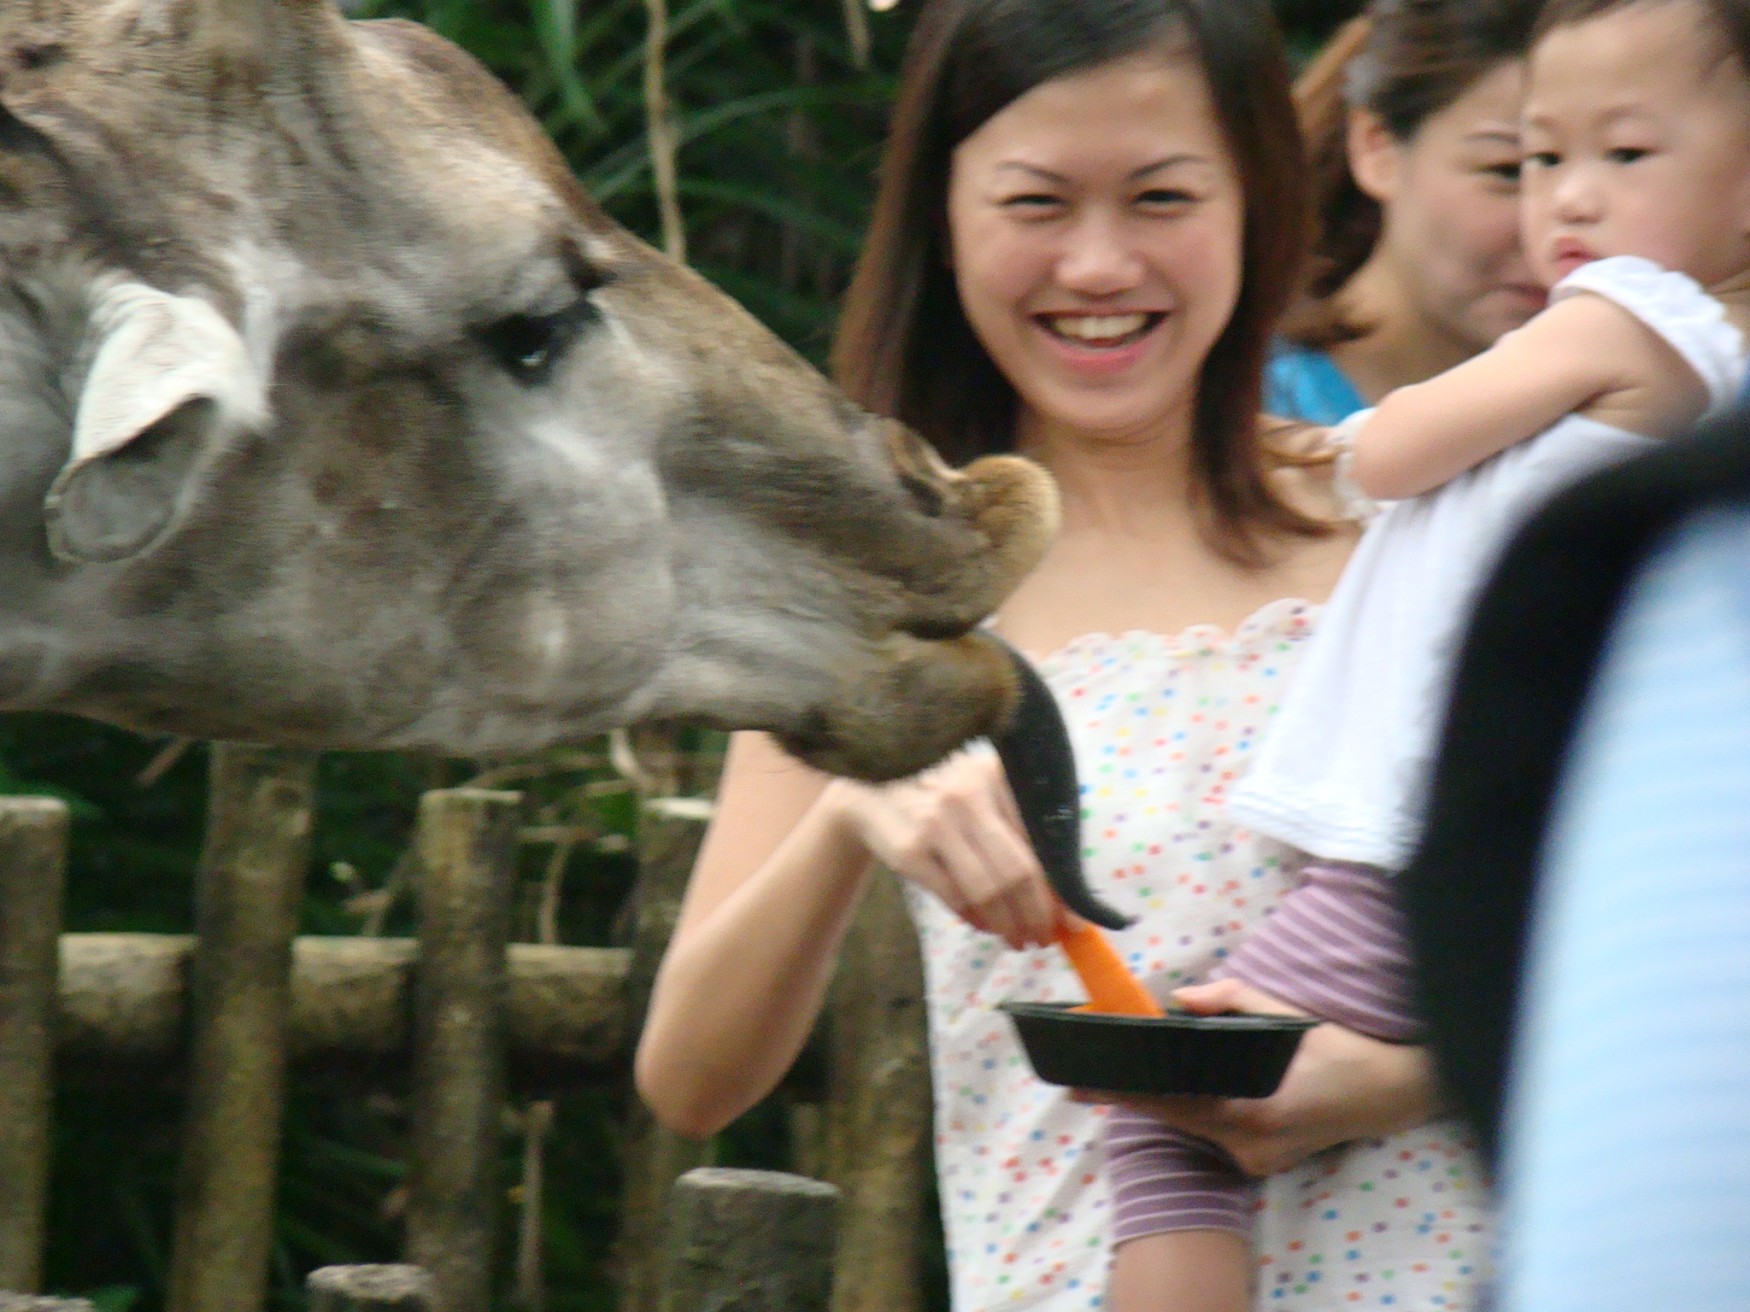 Giraffe Feeding at the Singapore Zoo